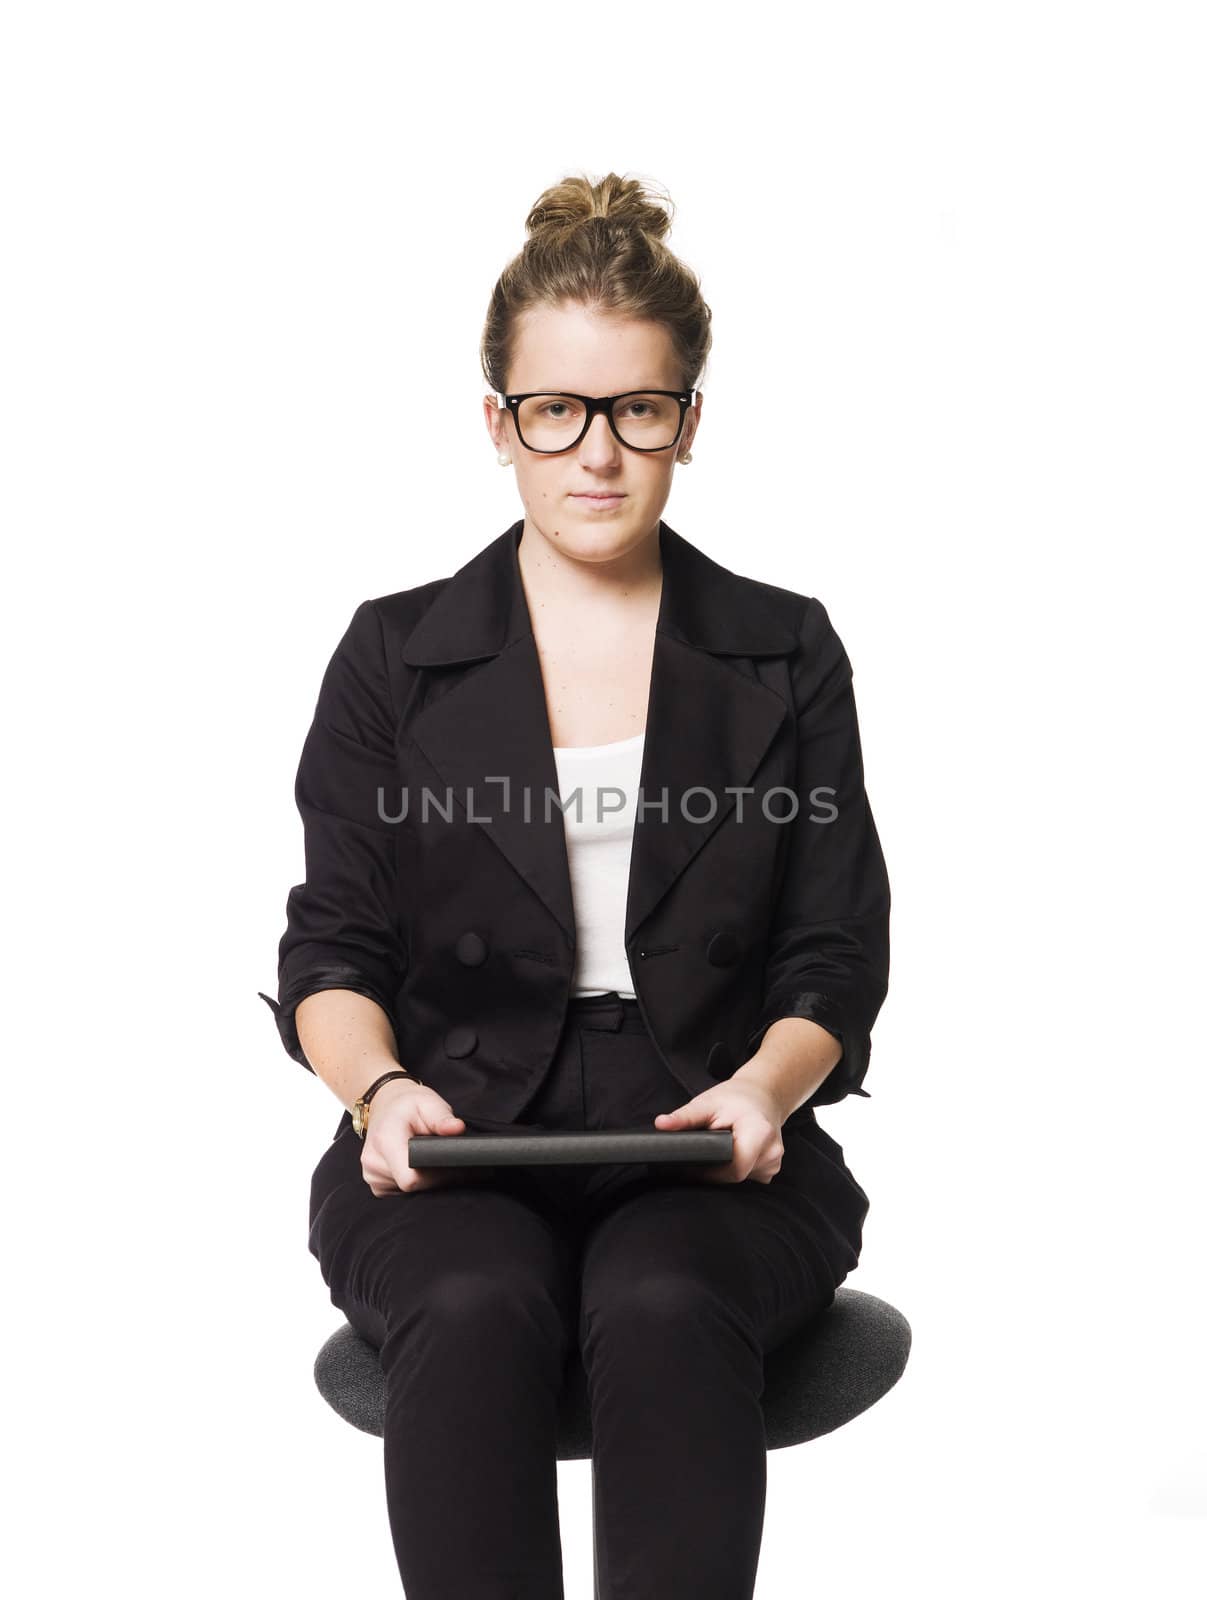 Buisnesswoman sitting on a chair by gemenacom